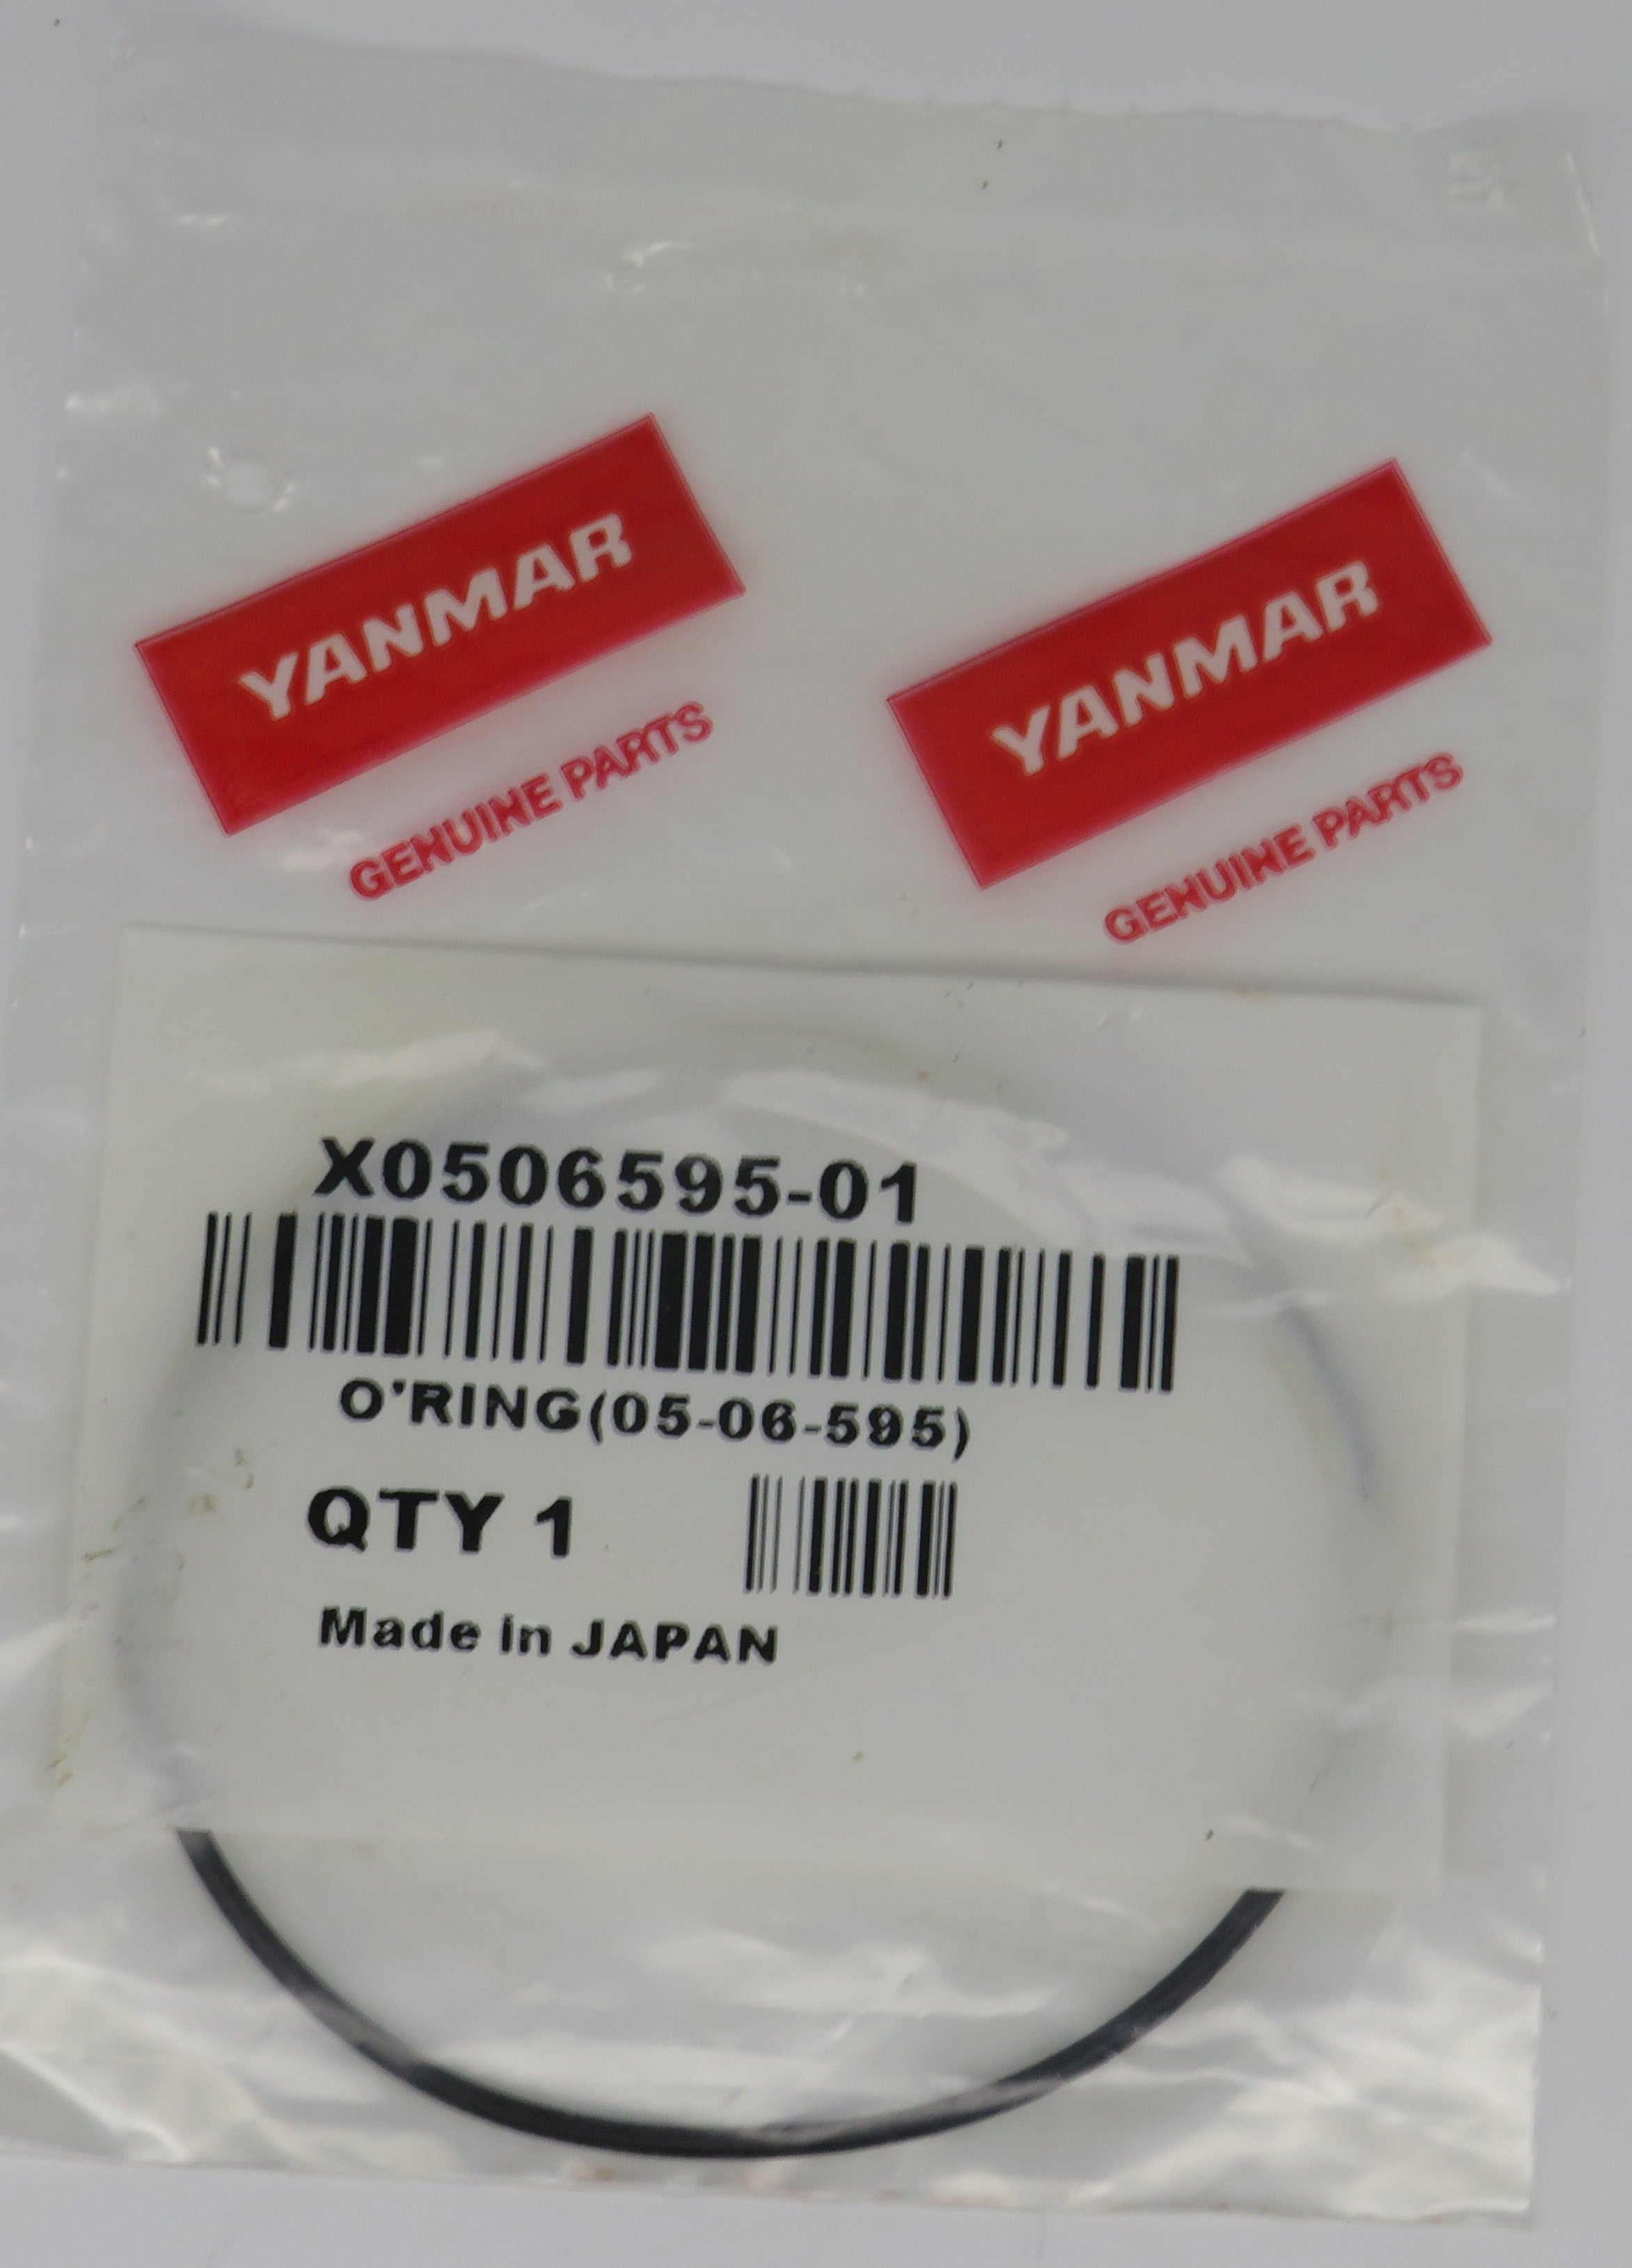 X0506595-01 Yanmar (05-06-595) 4LHA Raw Water Pump Cover O-Ring